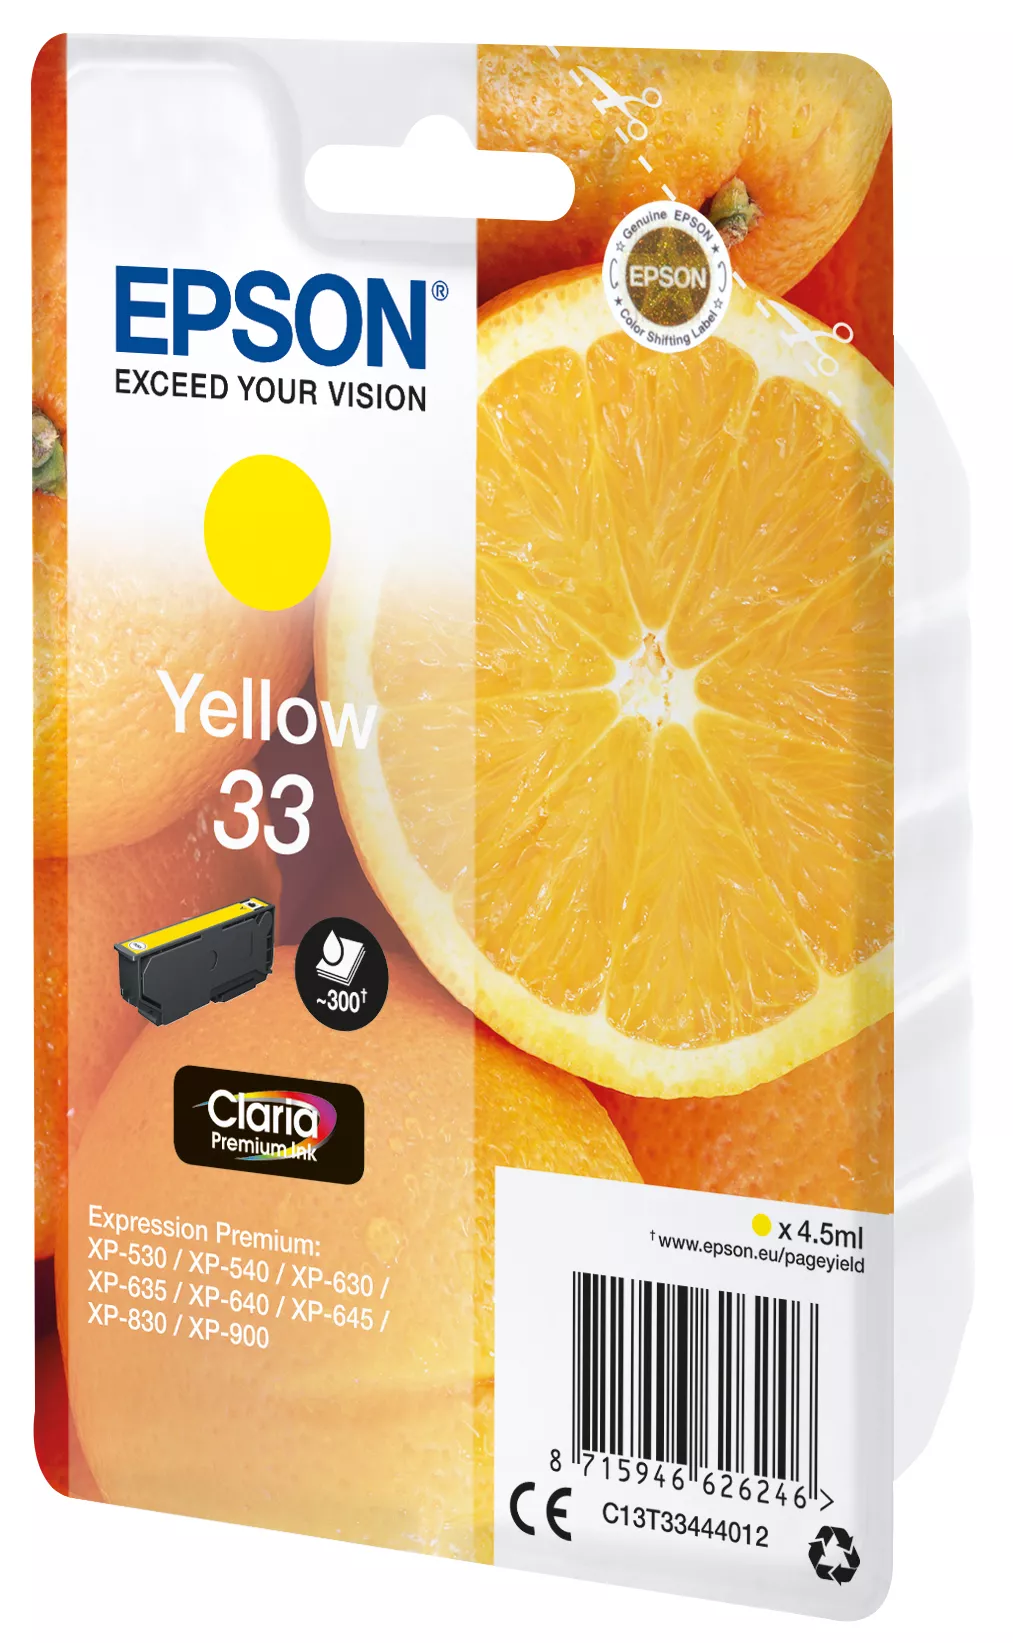 Vente EPSON Cartouche Oranges Encre Claria Premium Jaune Epson au meilleur prix - visuel 2